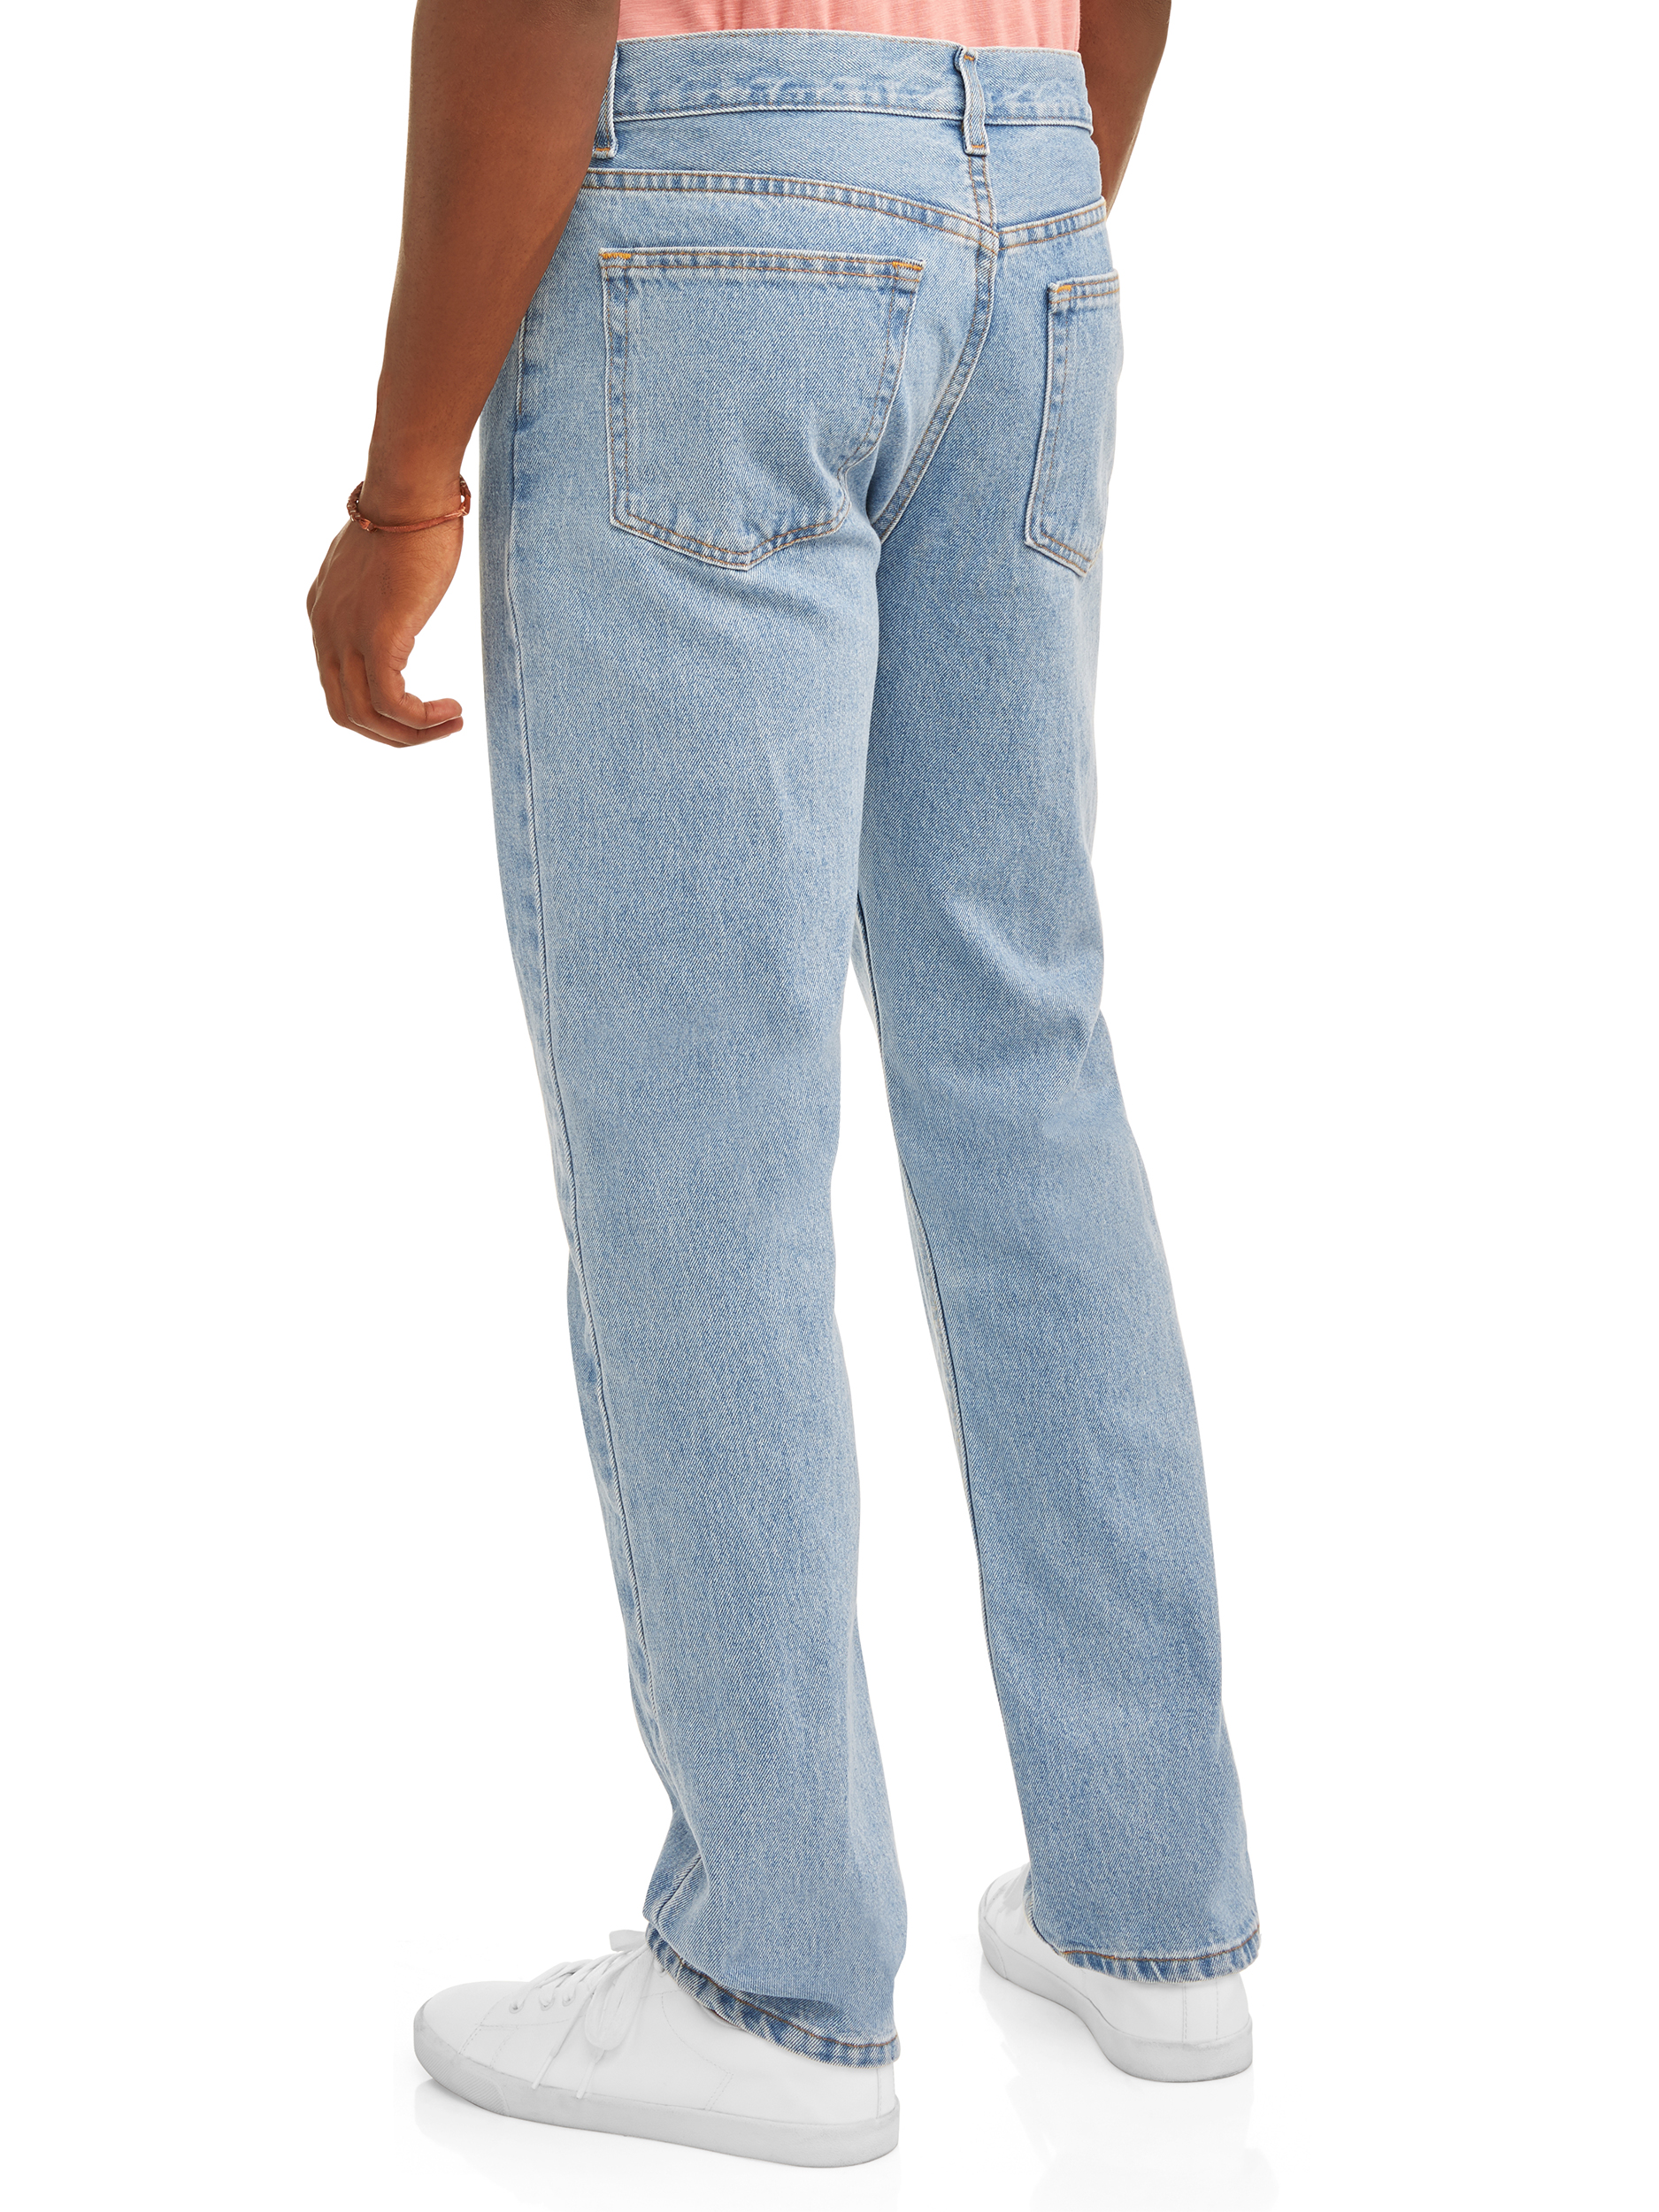 George Men's and Big Men's 100% Cotton Regular Fit Jeans - image 5 of 9